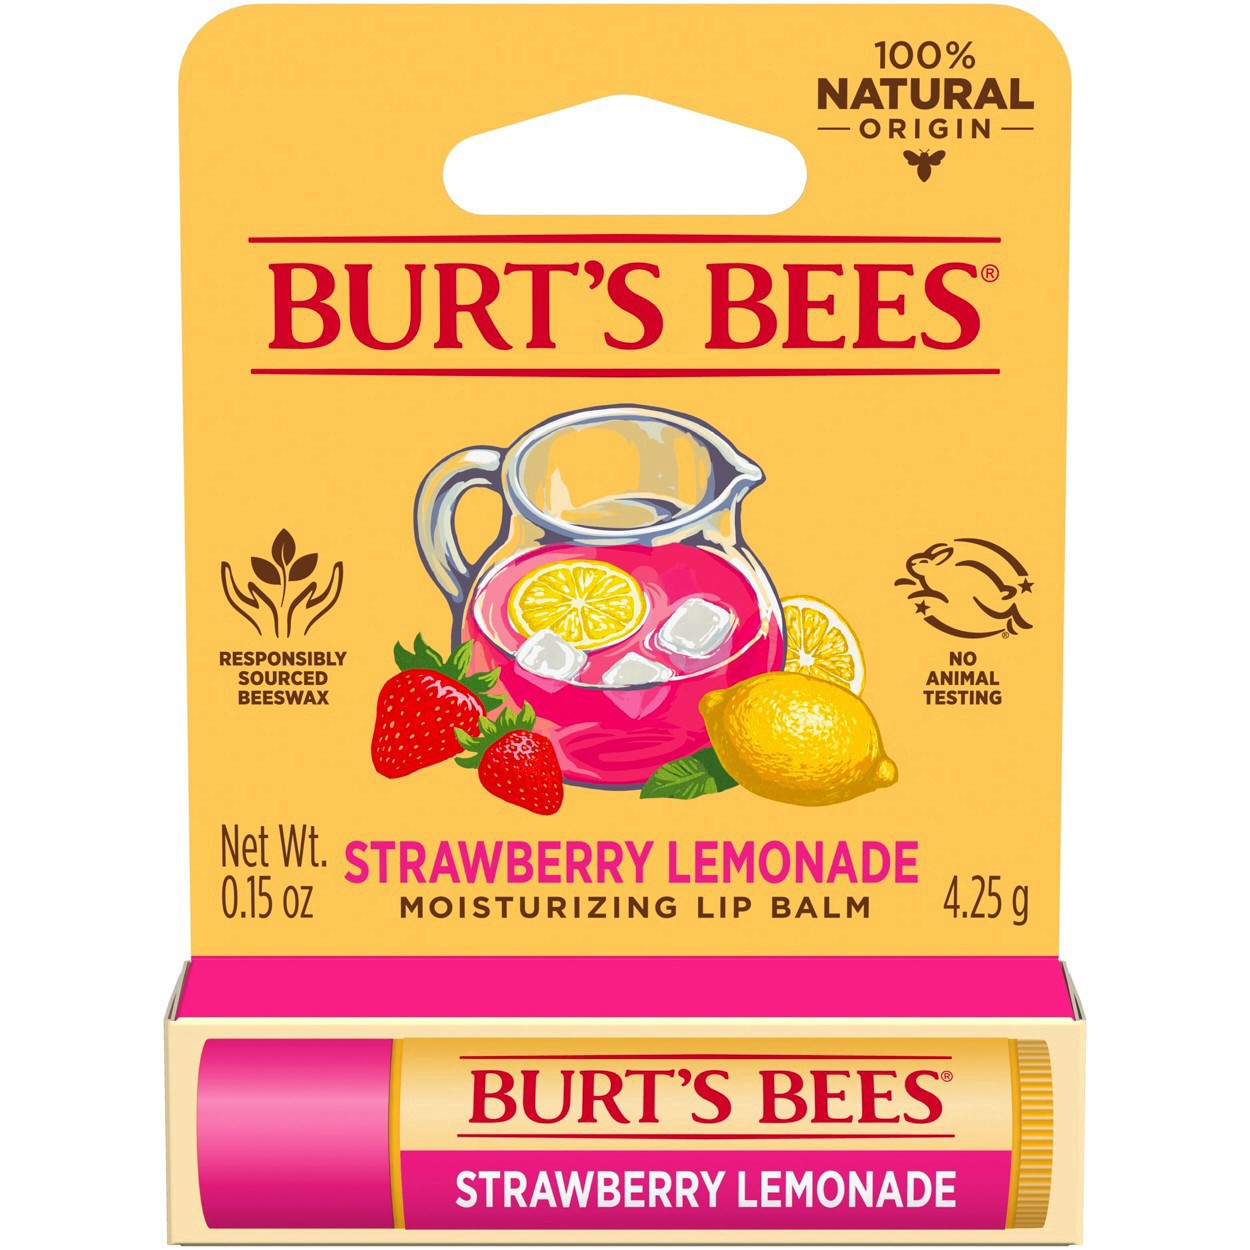 Burt's Bees Strawberry Lemonade Lip Balm - 0.15oz : Target